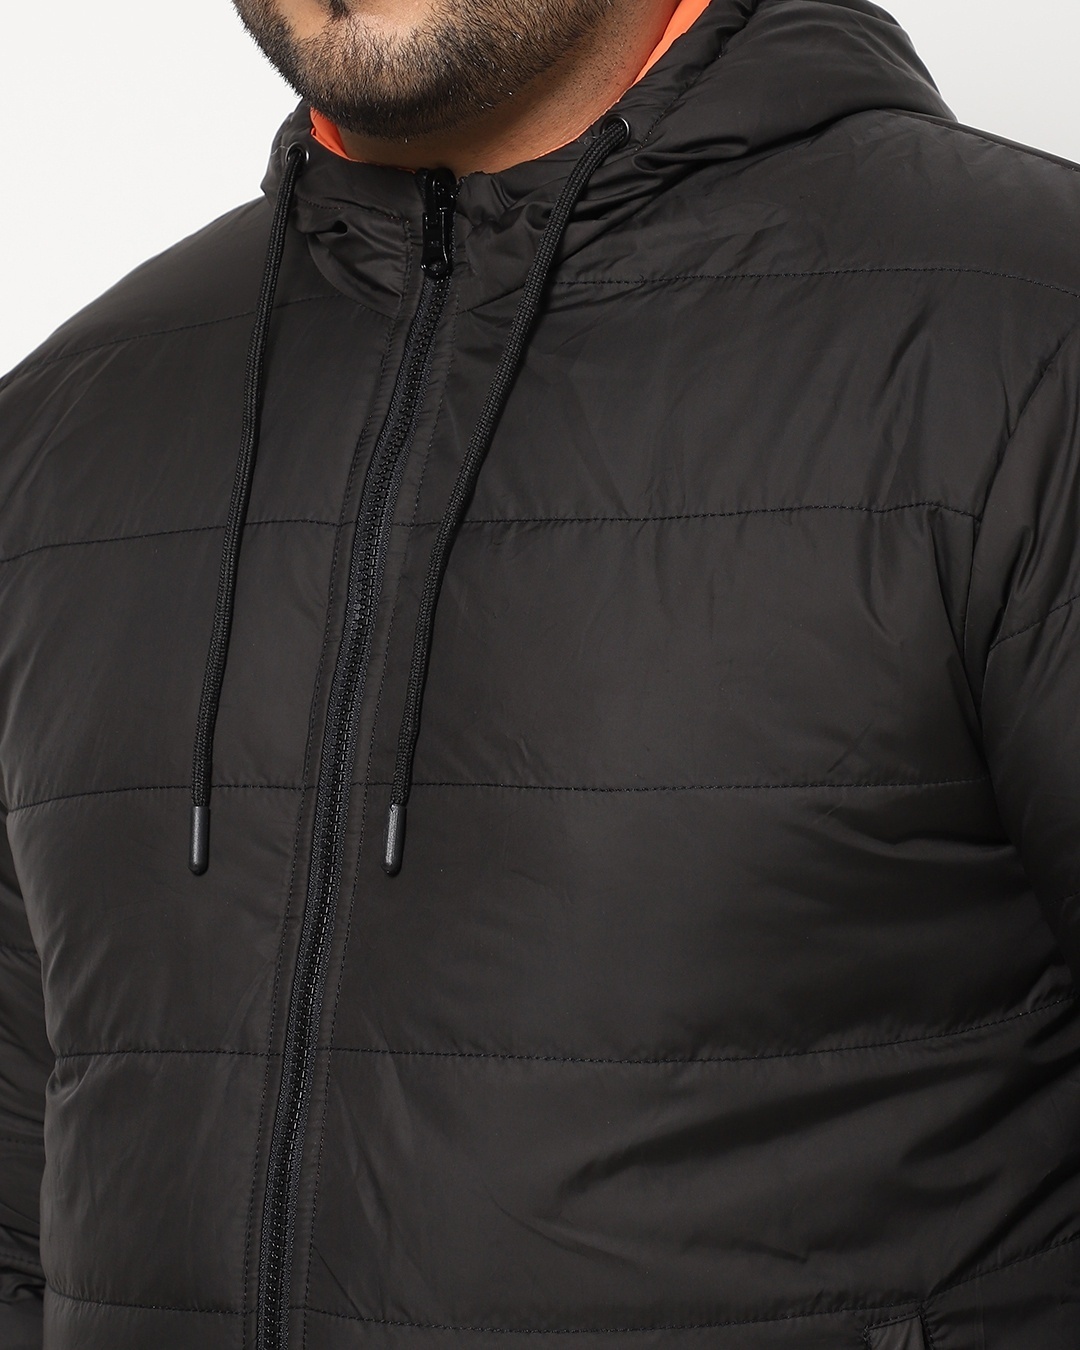 Shop Black-Burnt Orange Plus Size Puffer Jacket